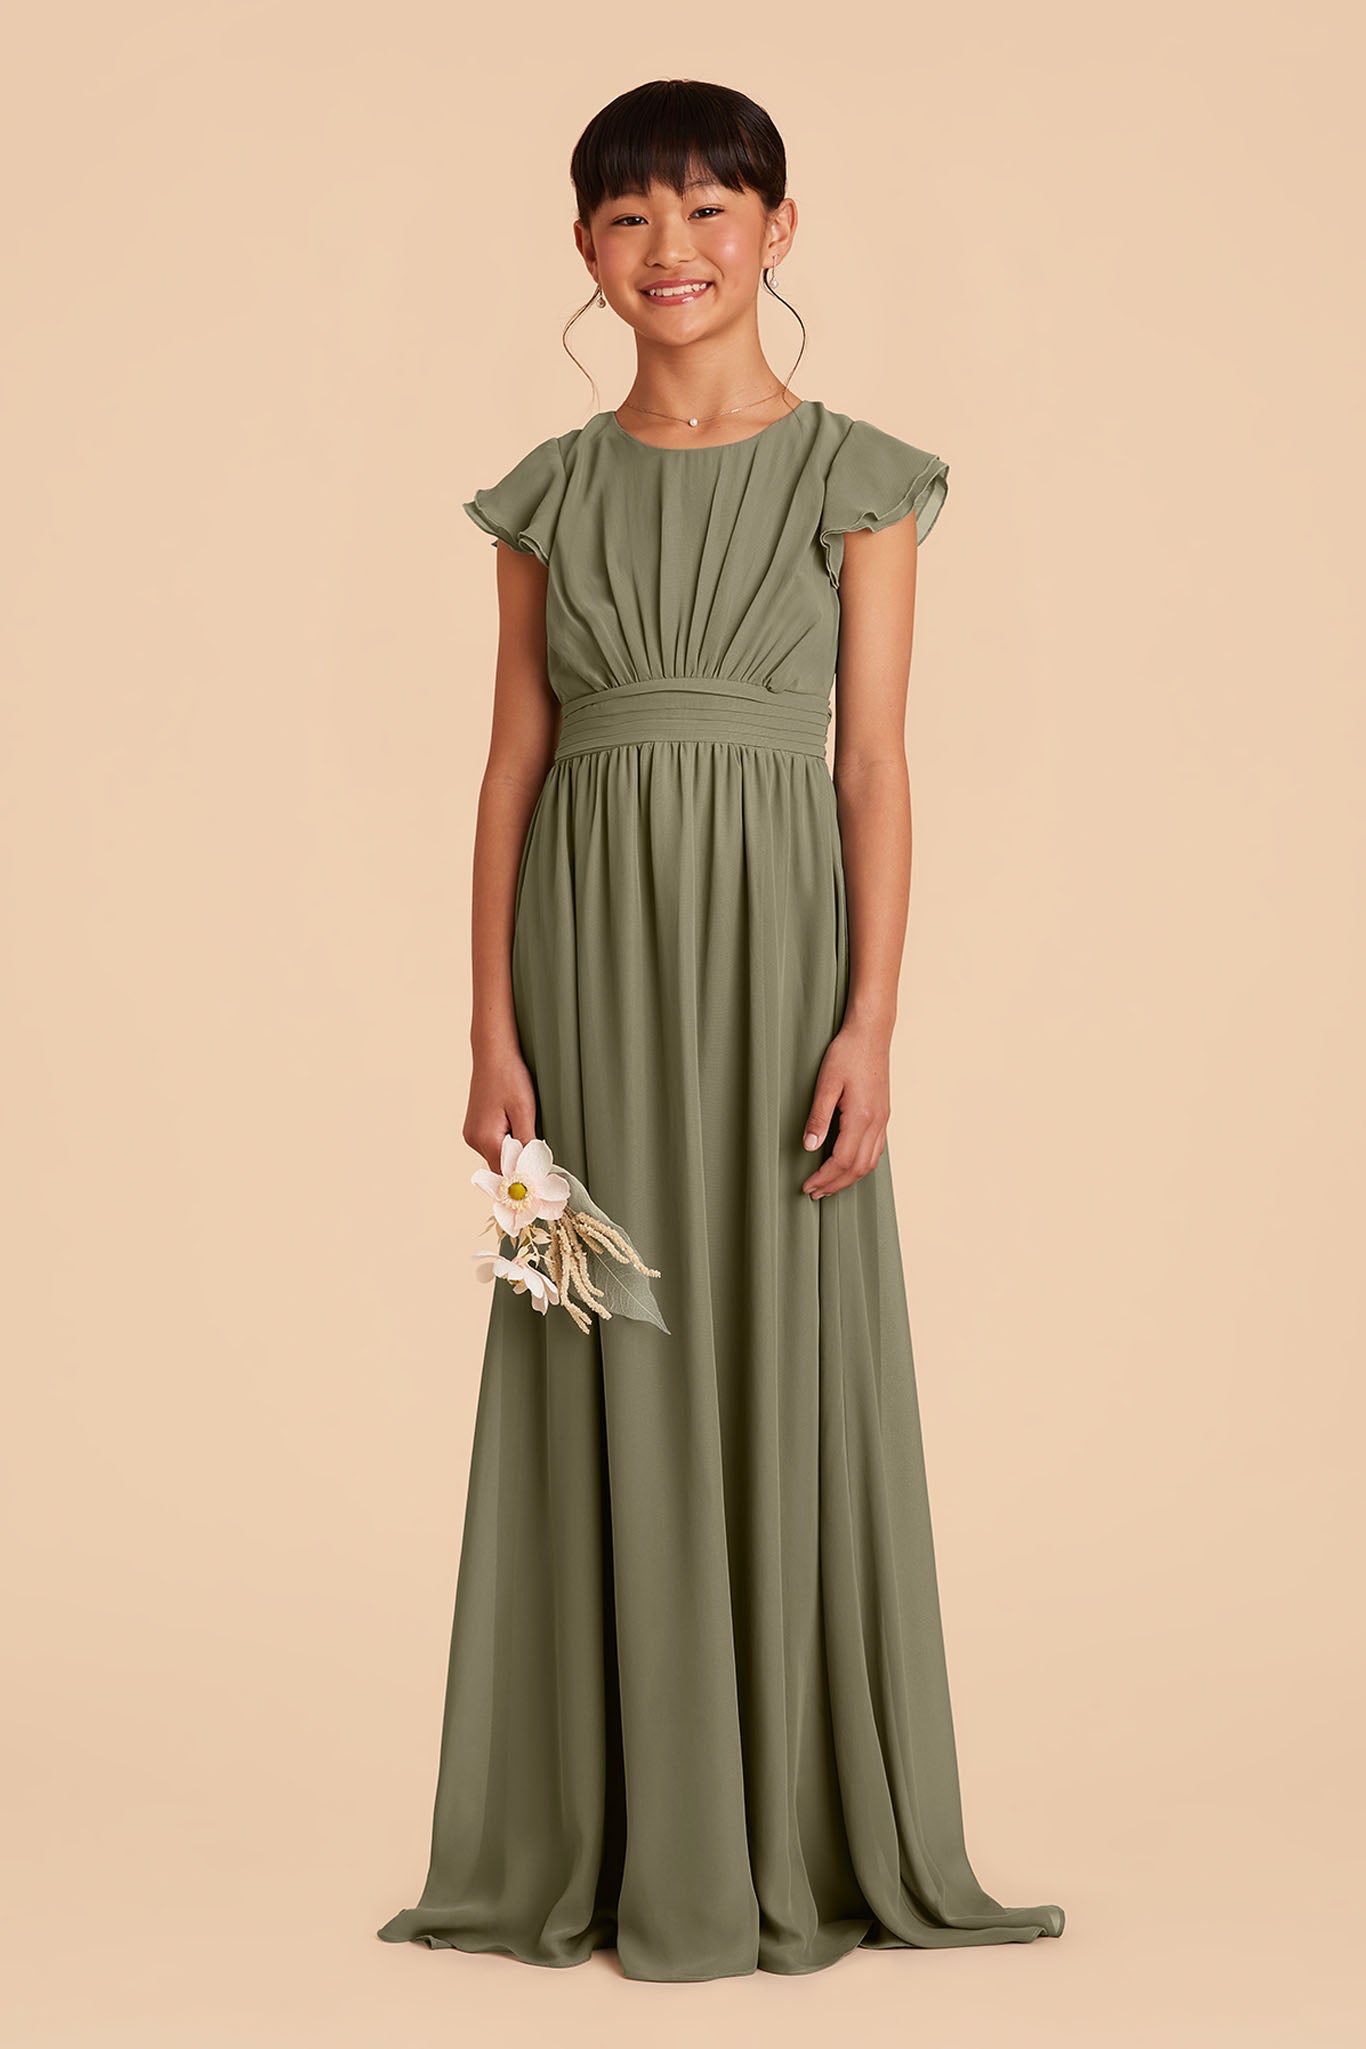 Moss Green Celine Junior Dress by Birdy Grey